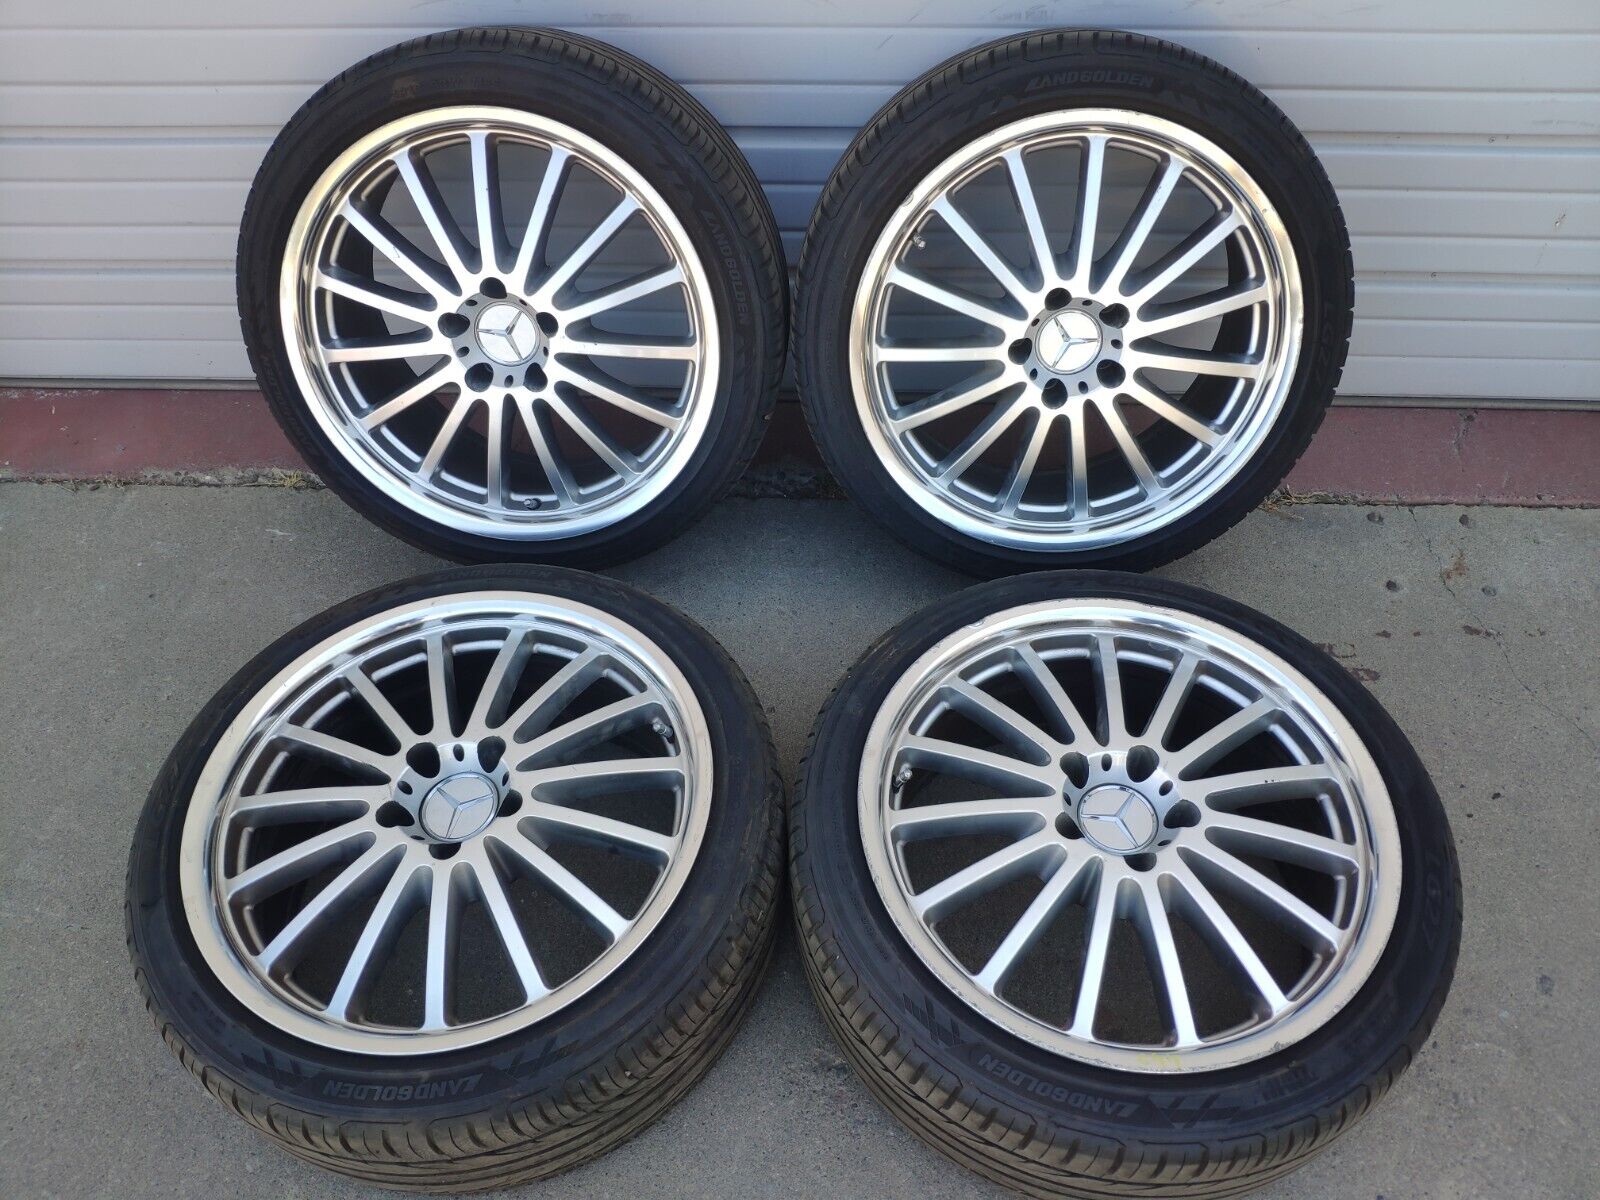 02 MERCEDES CLK320 W208 wheels rims tires set of 4 225/40ZR18 92W M+S C44